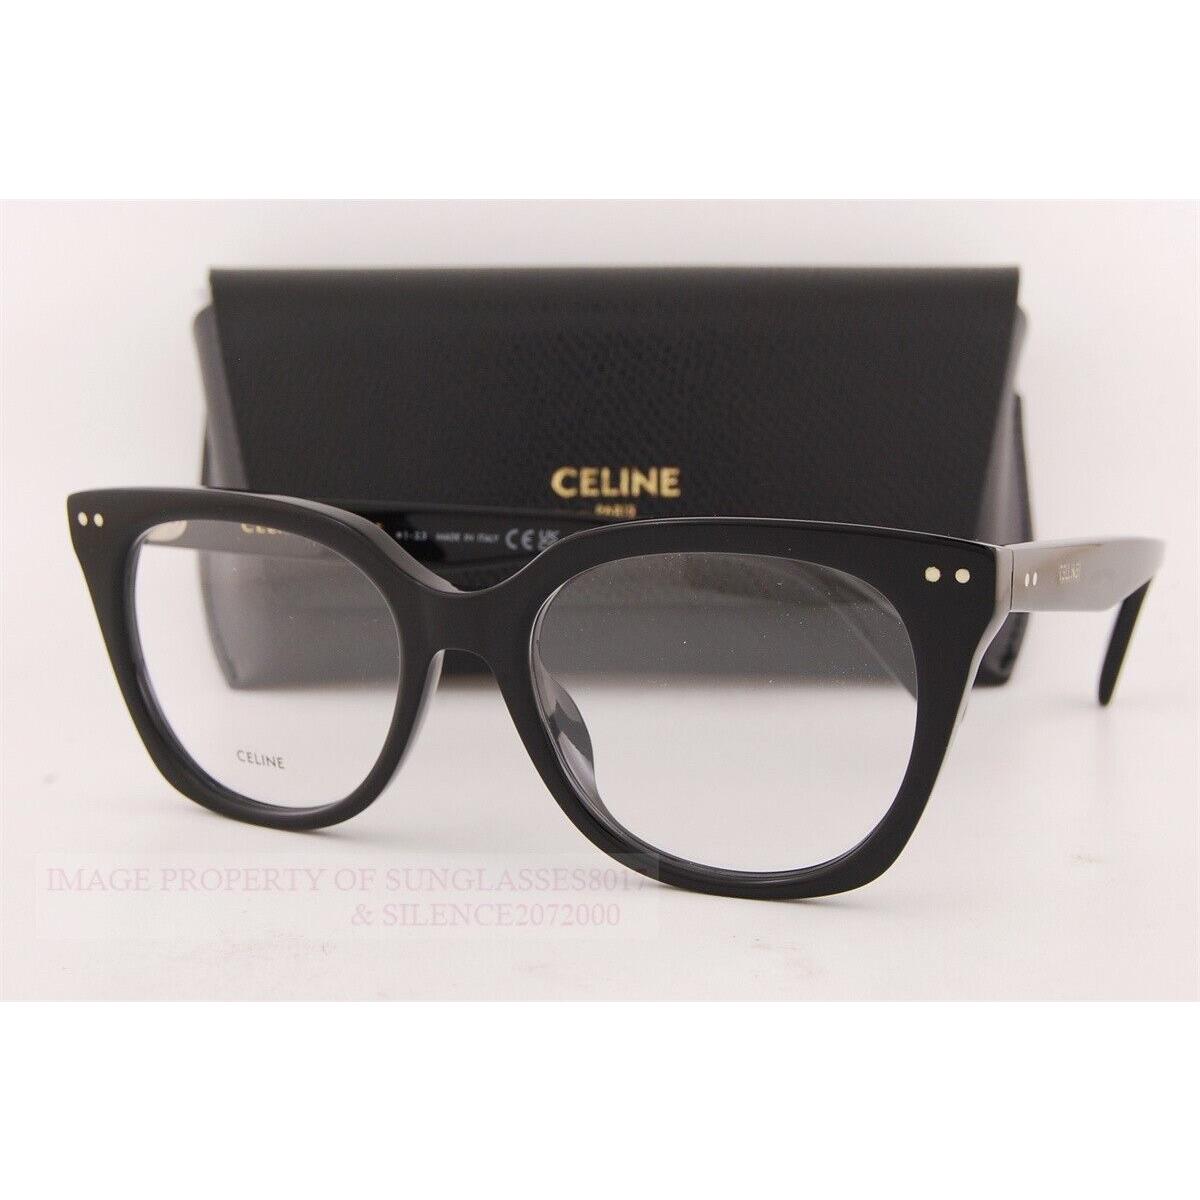 Celine Eyeglass Frames CL 50116I 001 Black For Women Size 52mm